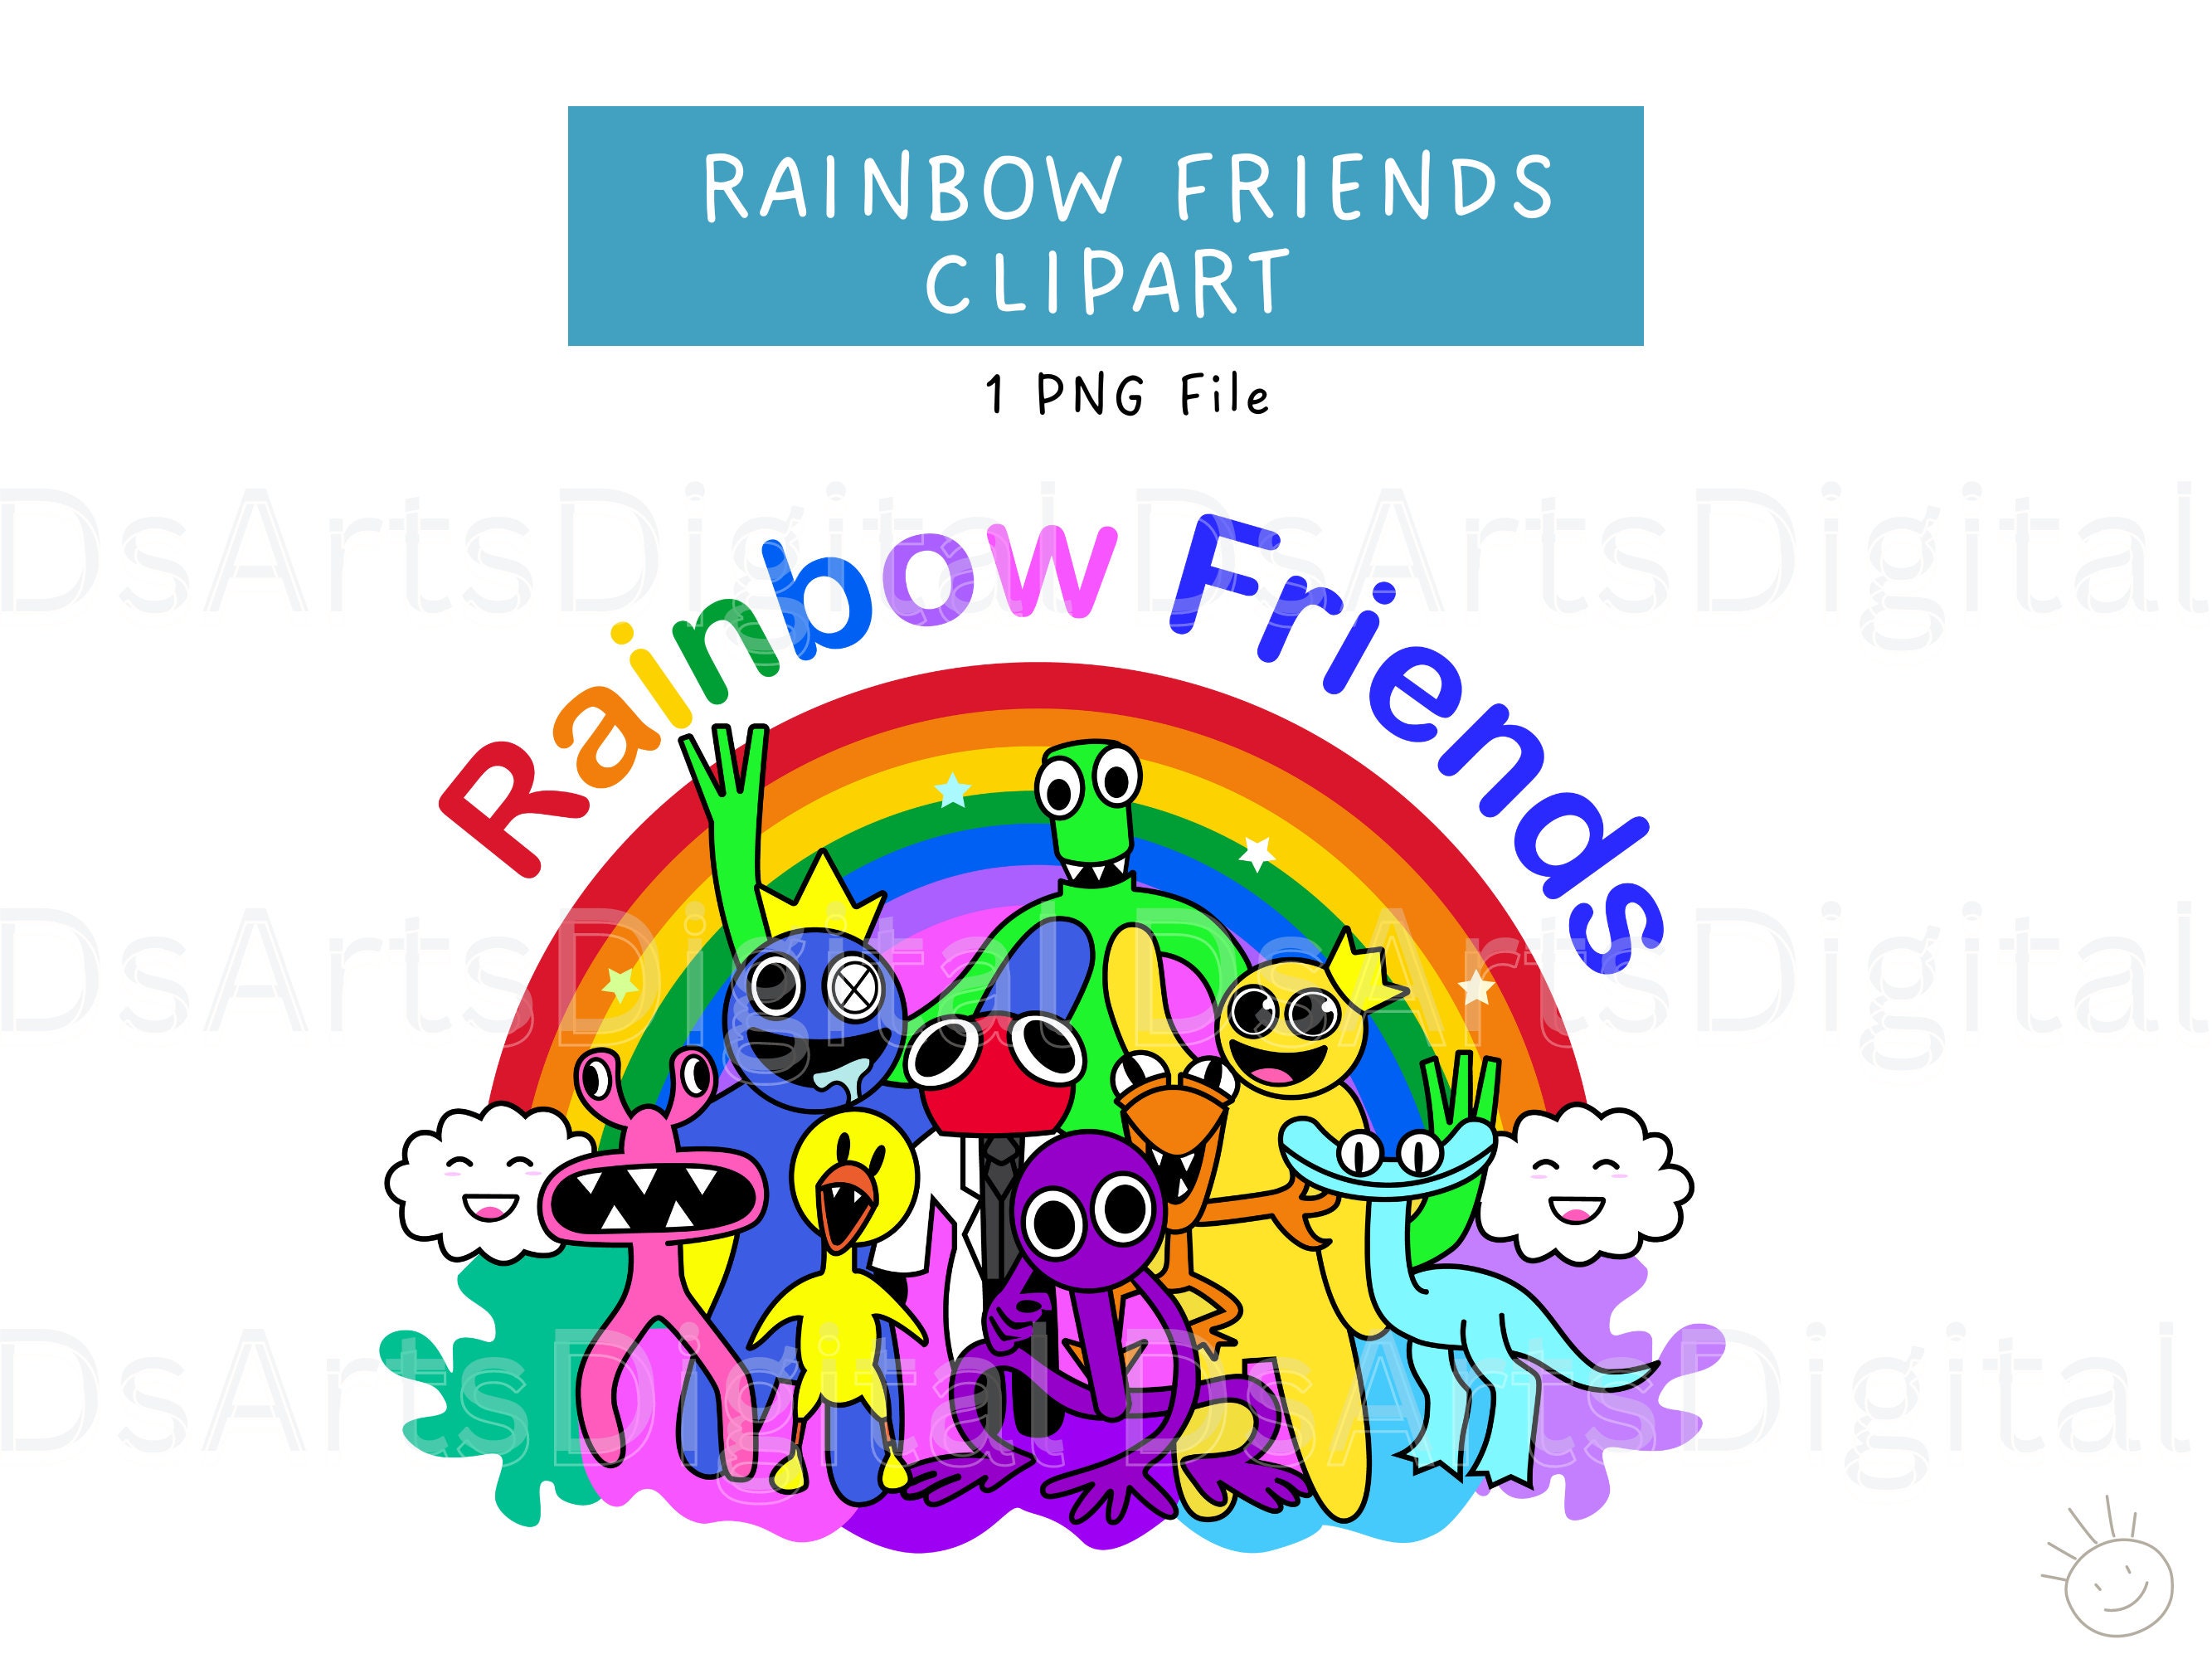 Rainbow Friends Roblox Birthday Chip Bag Digital File Printable